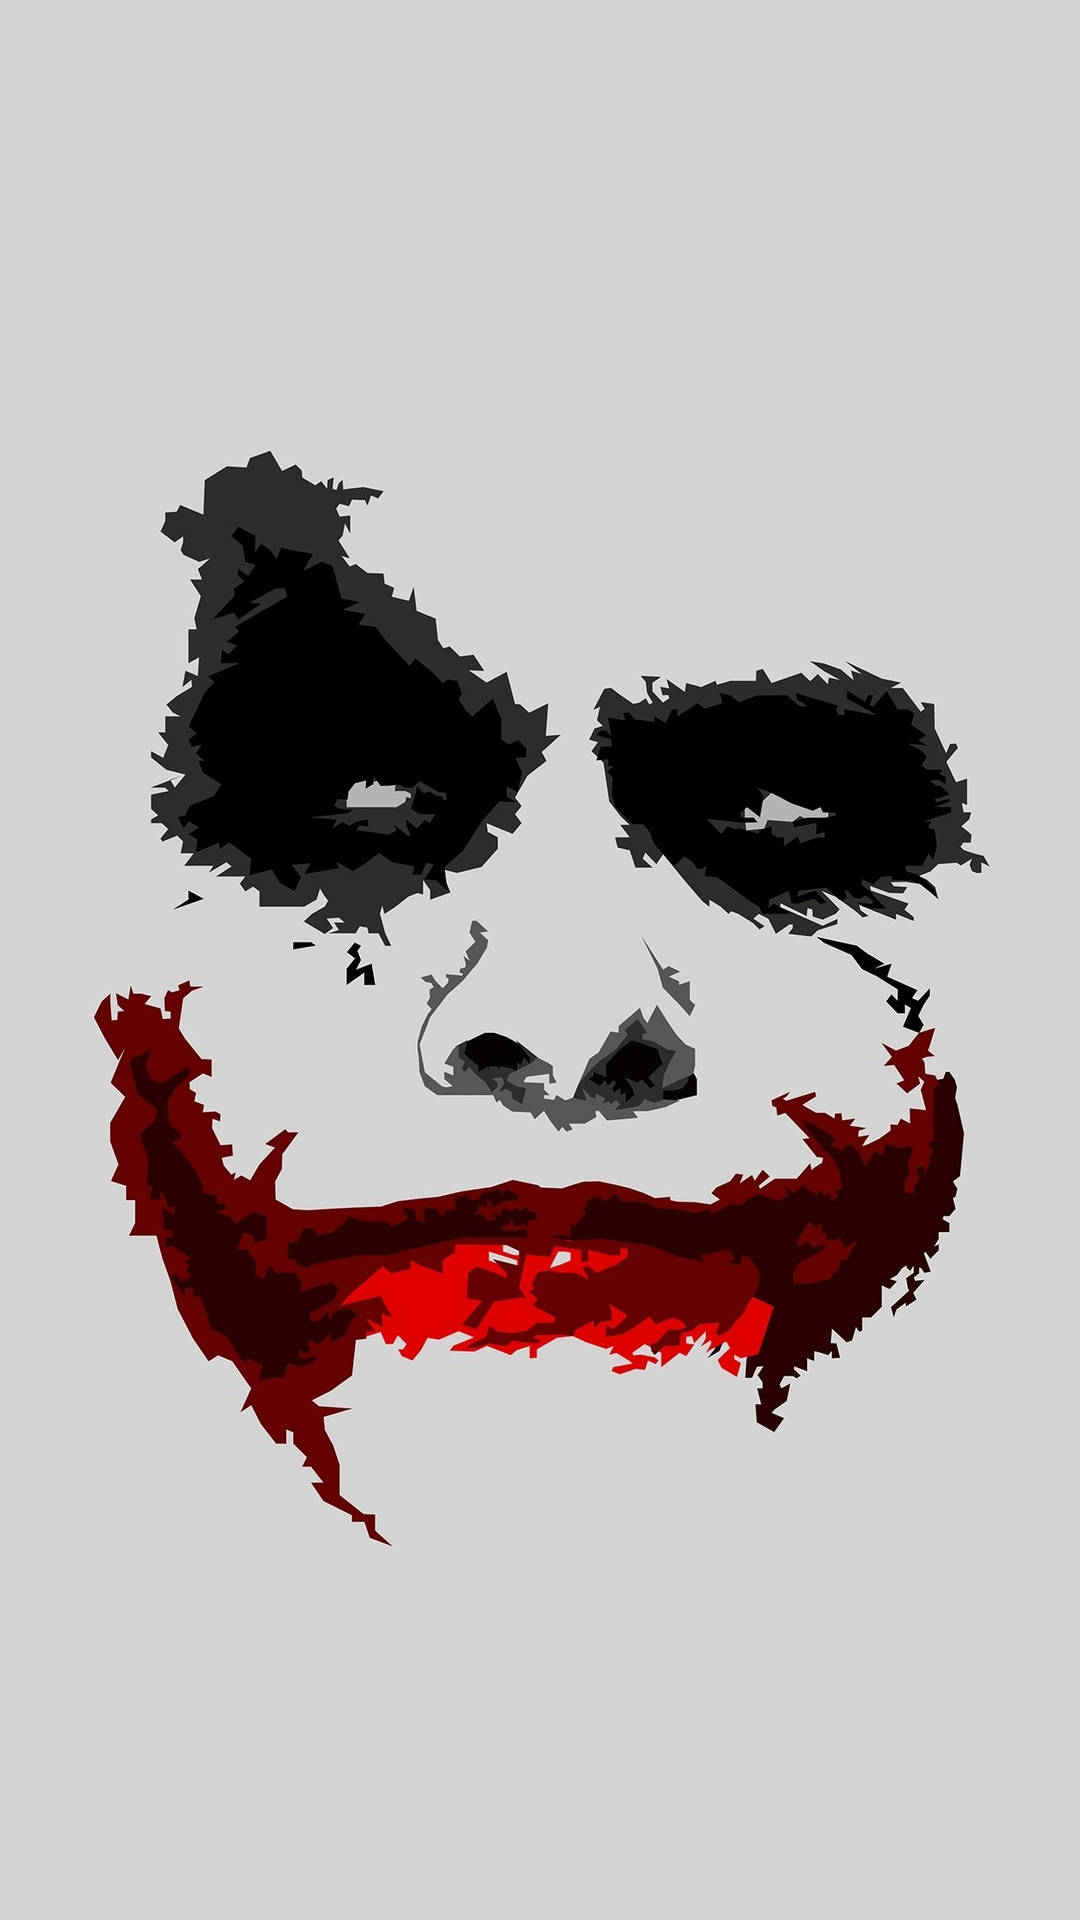 Joker movie poster on a black background, 2019 Desktop wallpapers 1920x1080